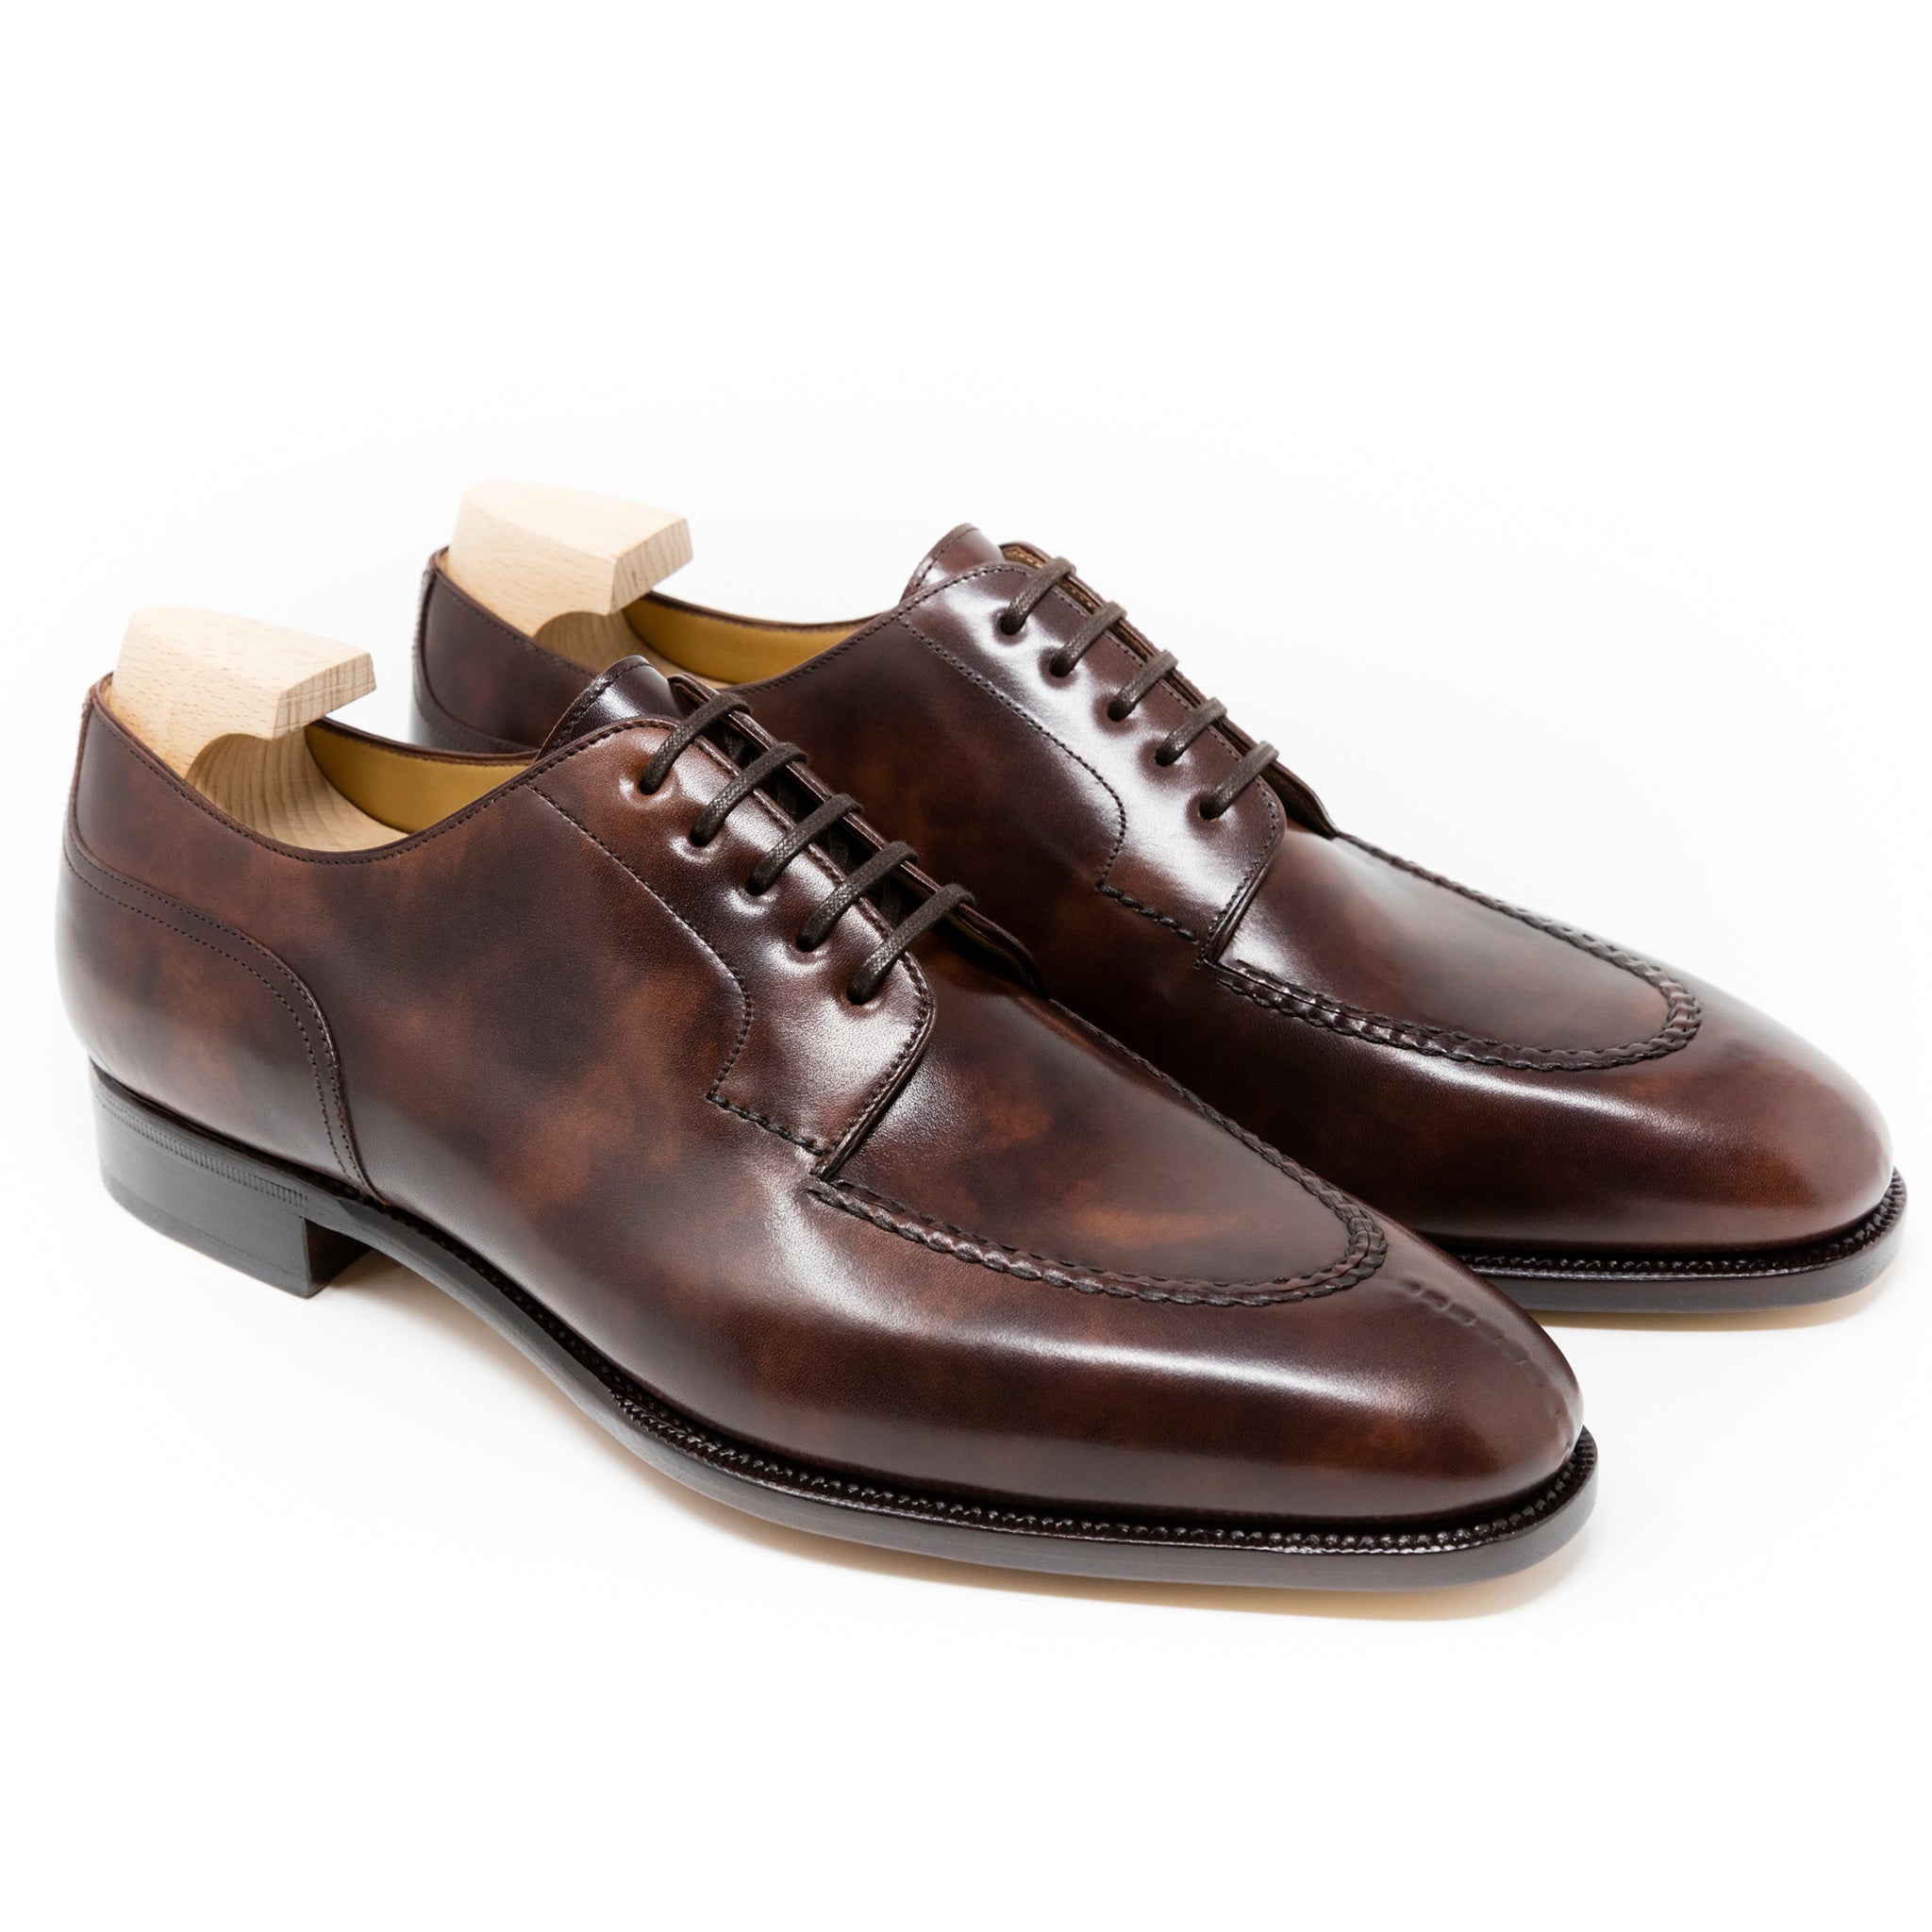 TLB Mallorca | Men's leather shoes | Blucher Shoes Artista Collection ...